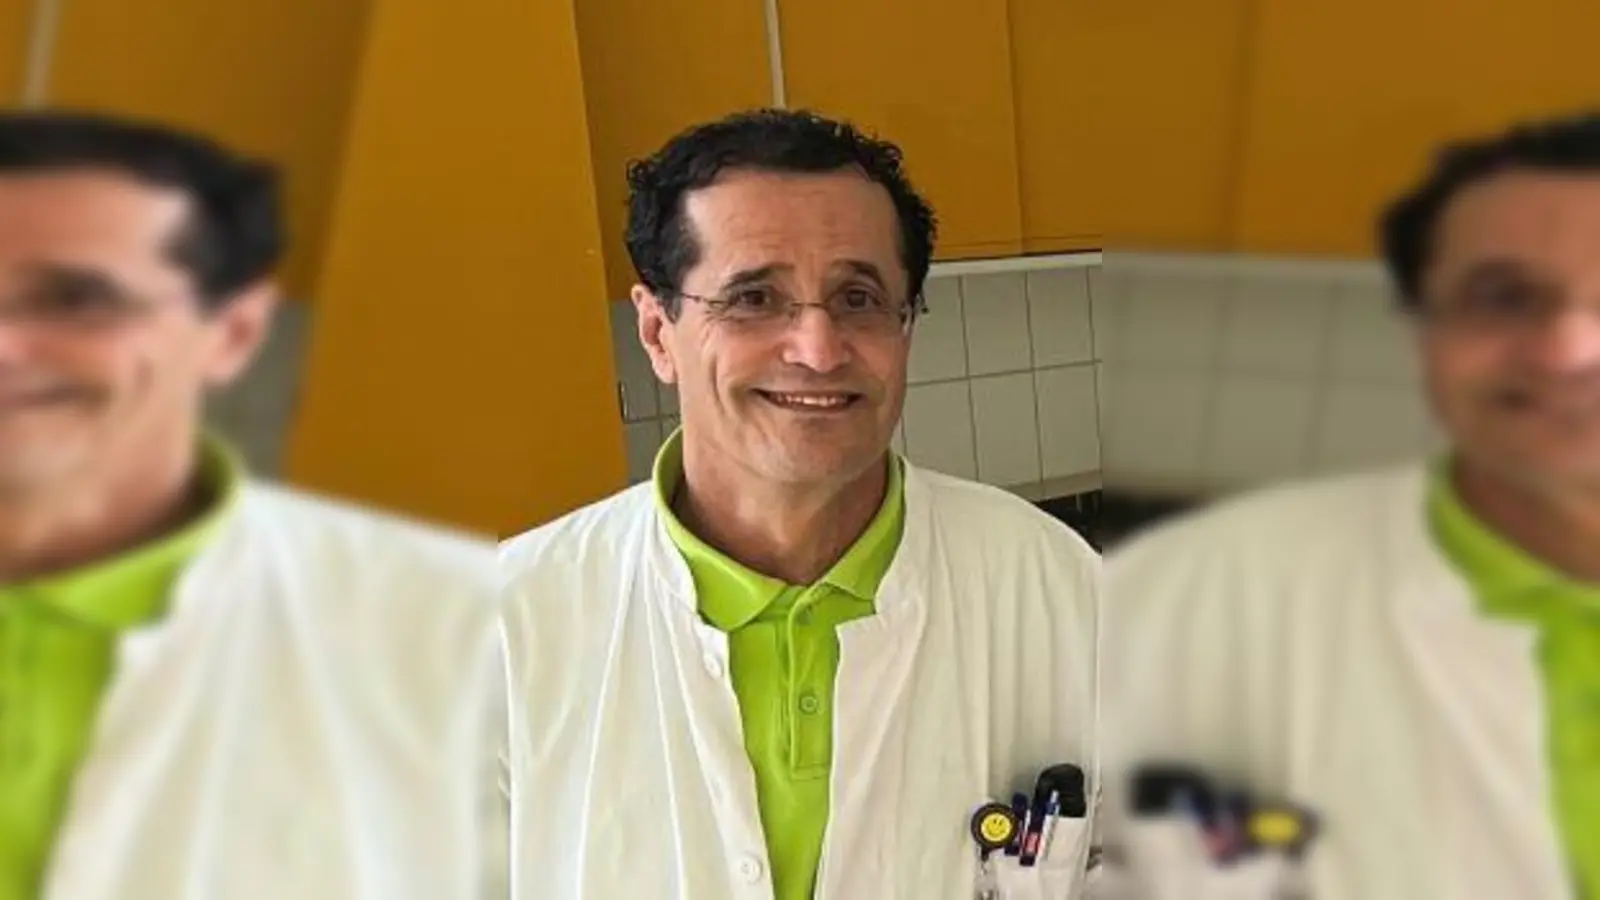 Chefarzt der Anästhesie und Notfallmediziner Mohamed Al Batani. (Foto: A. Shuhaiber)